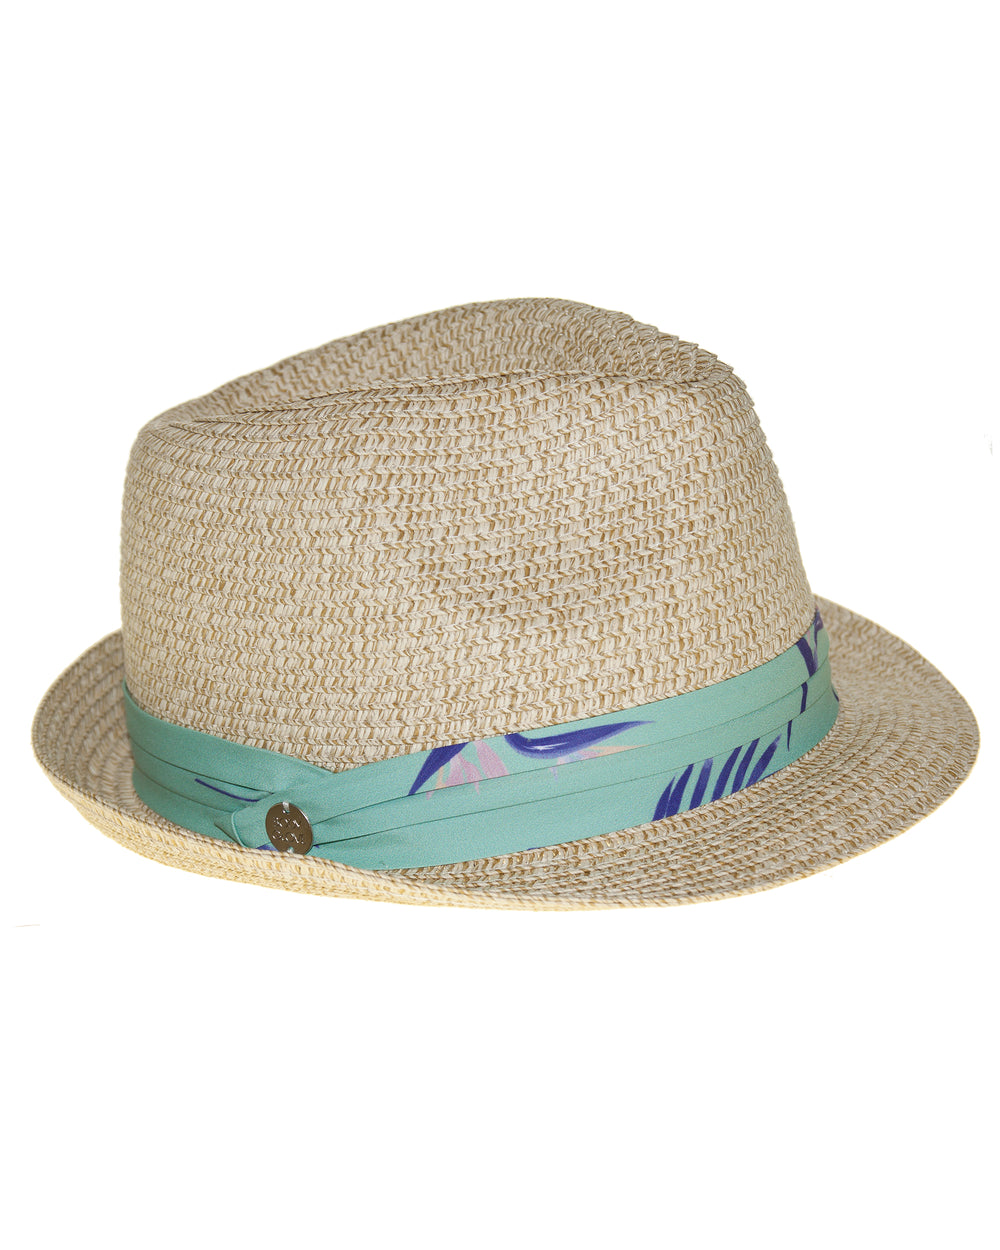 Straw Fedora Hat - Floral